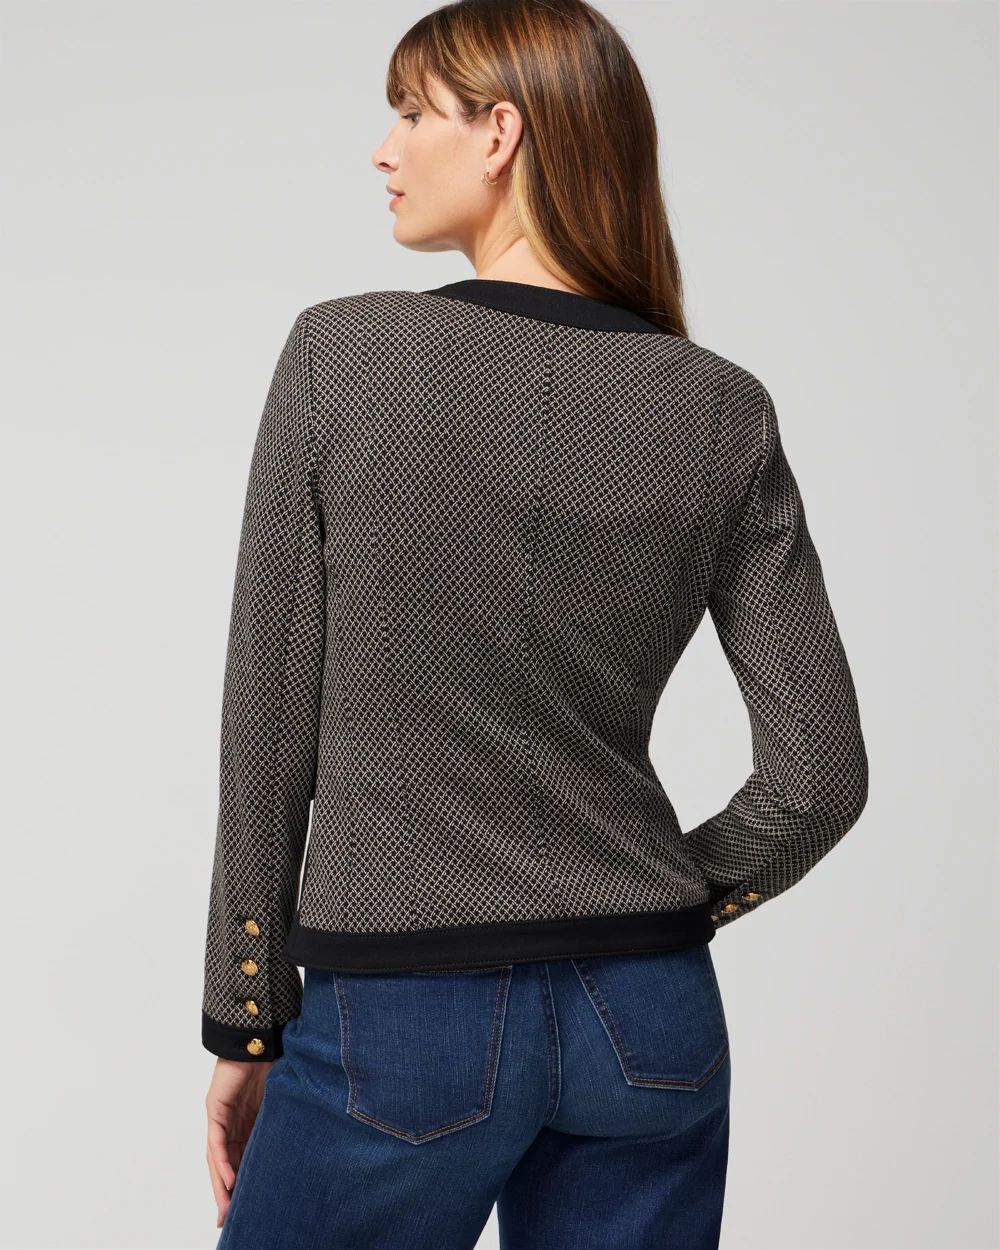 Petite WHBM® Jacquard Knit Stylist Jacket